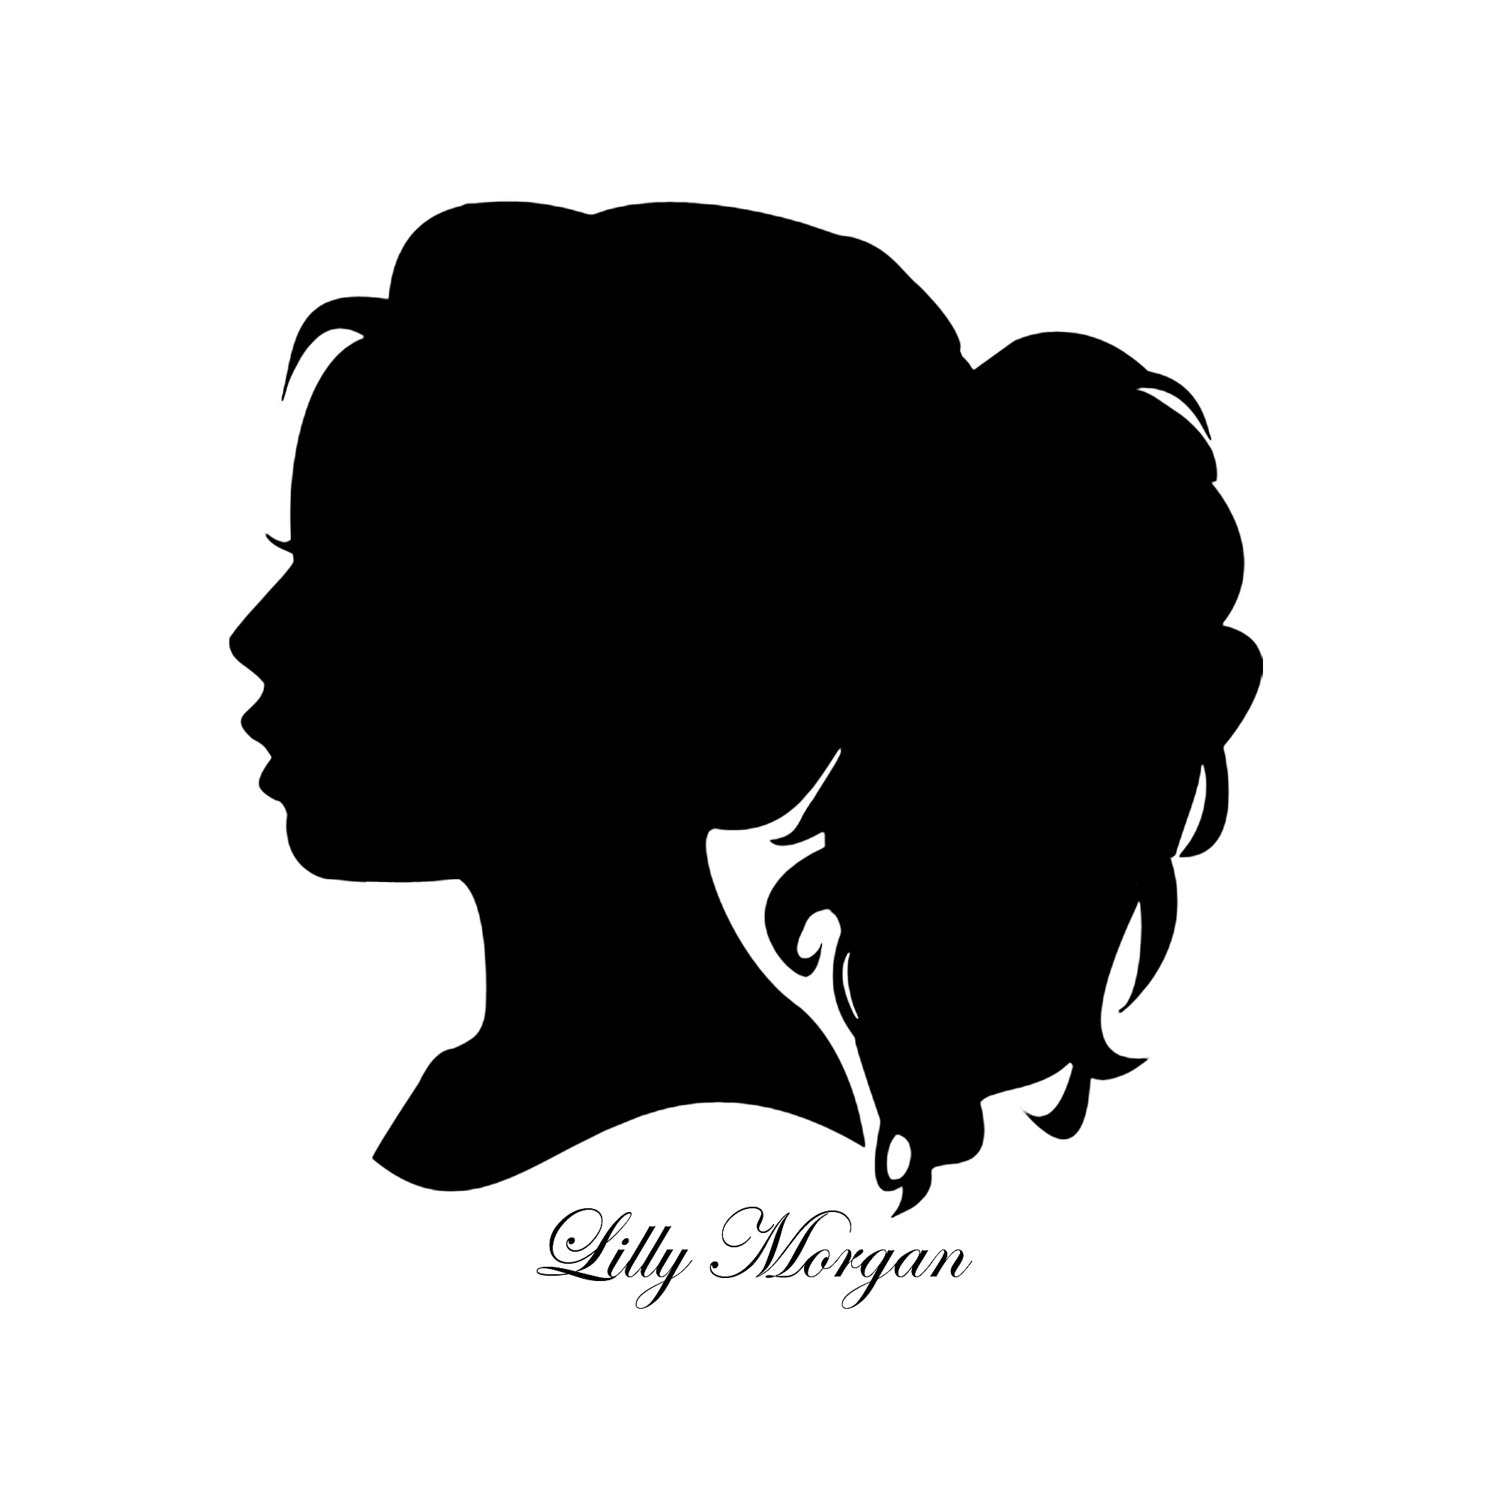 Custom DIGITAL Profile Silhouette by YesmCreative on Etsy